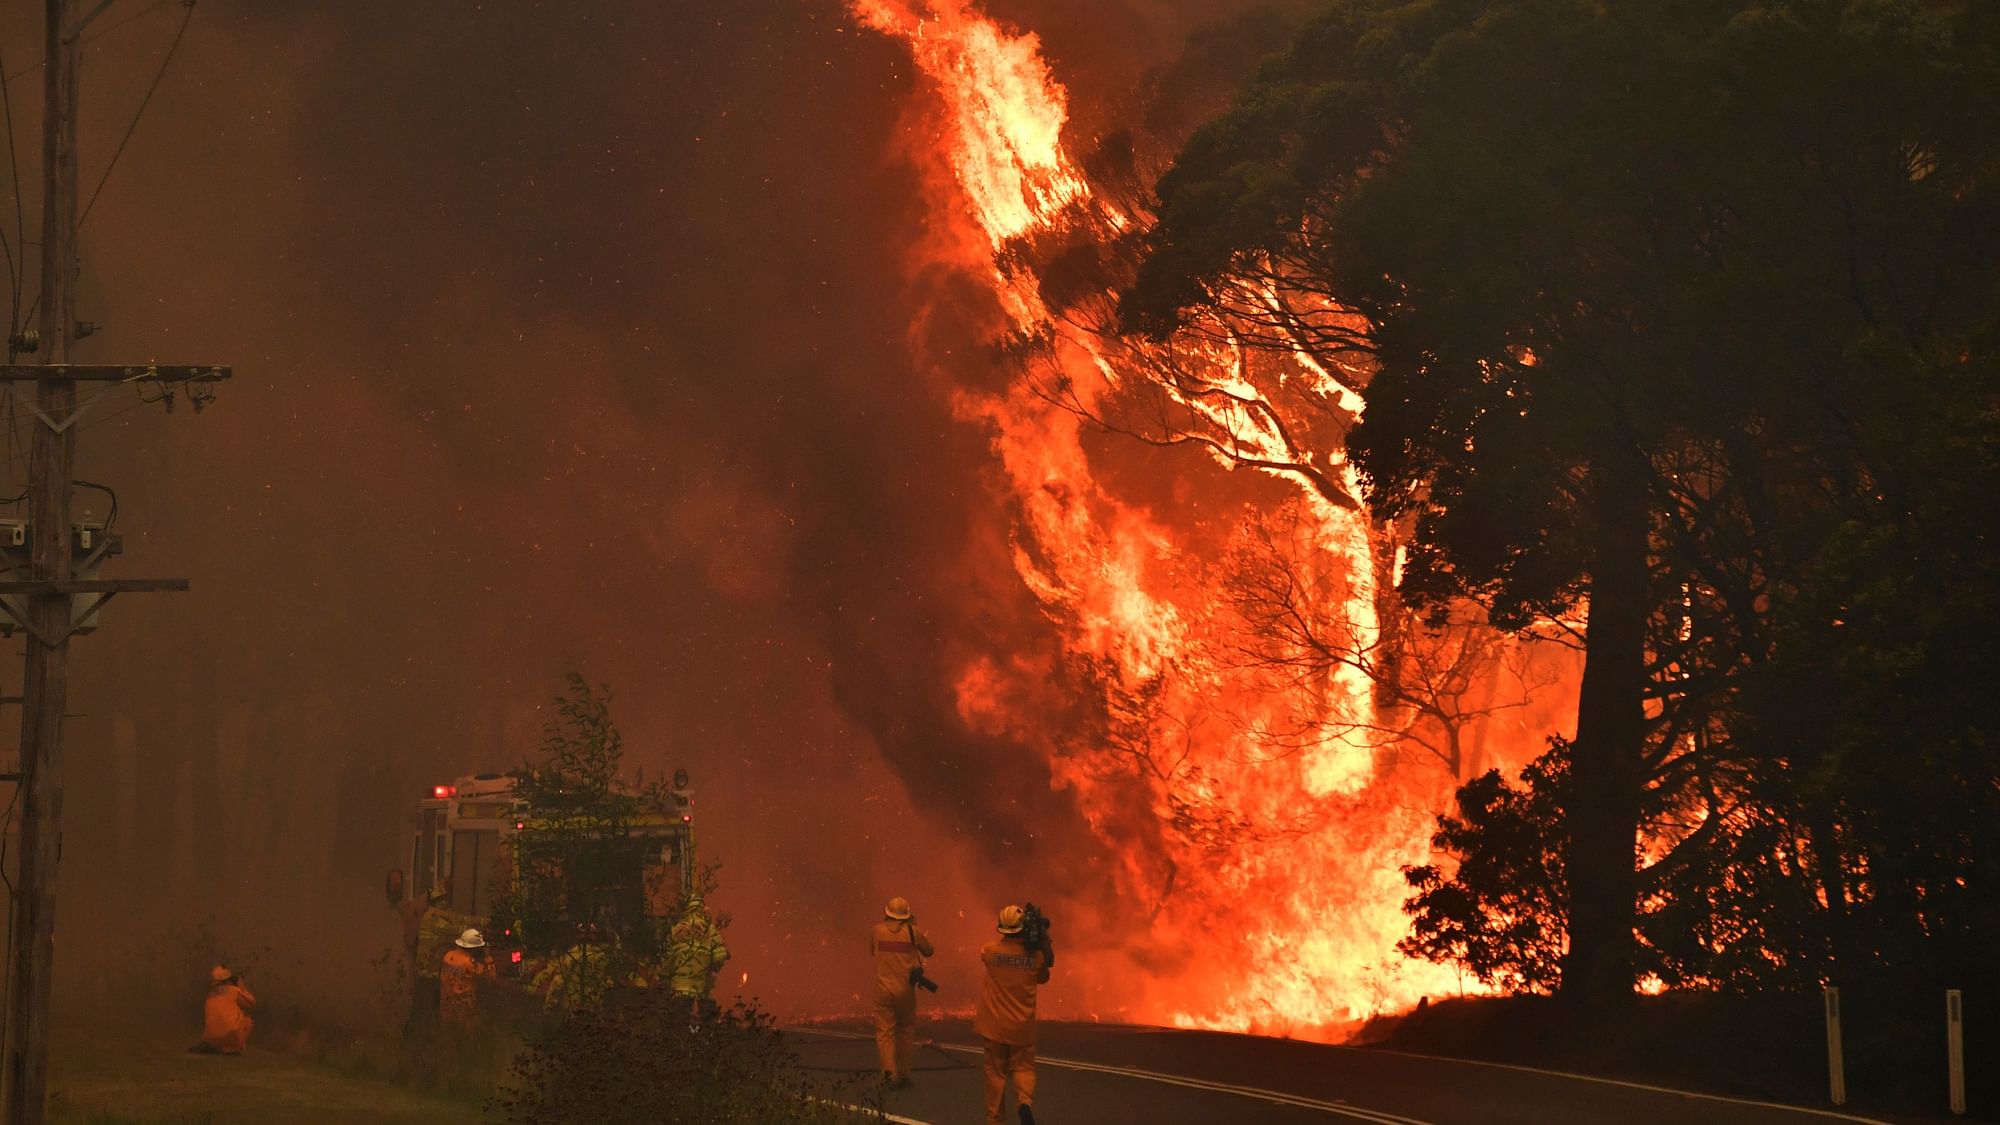 A fire truck is seen during a bushfire near Bilpin, 56 miles northwest of Sydney.